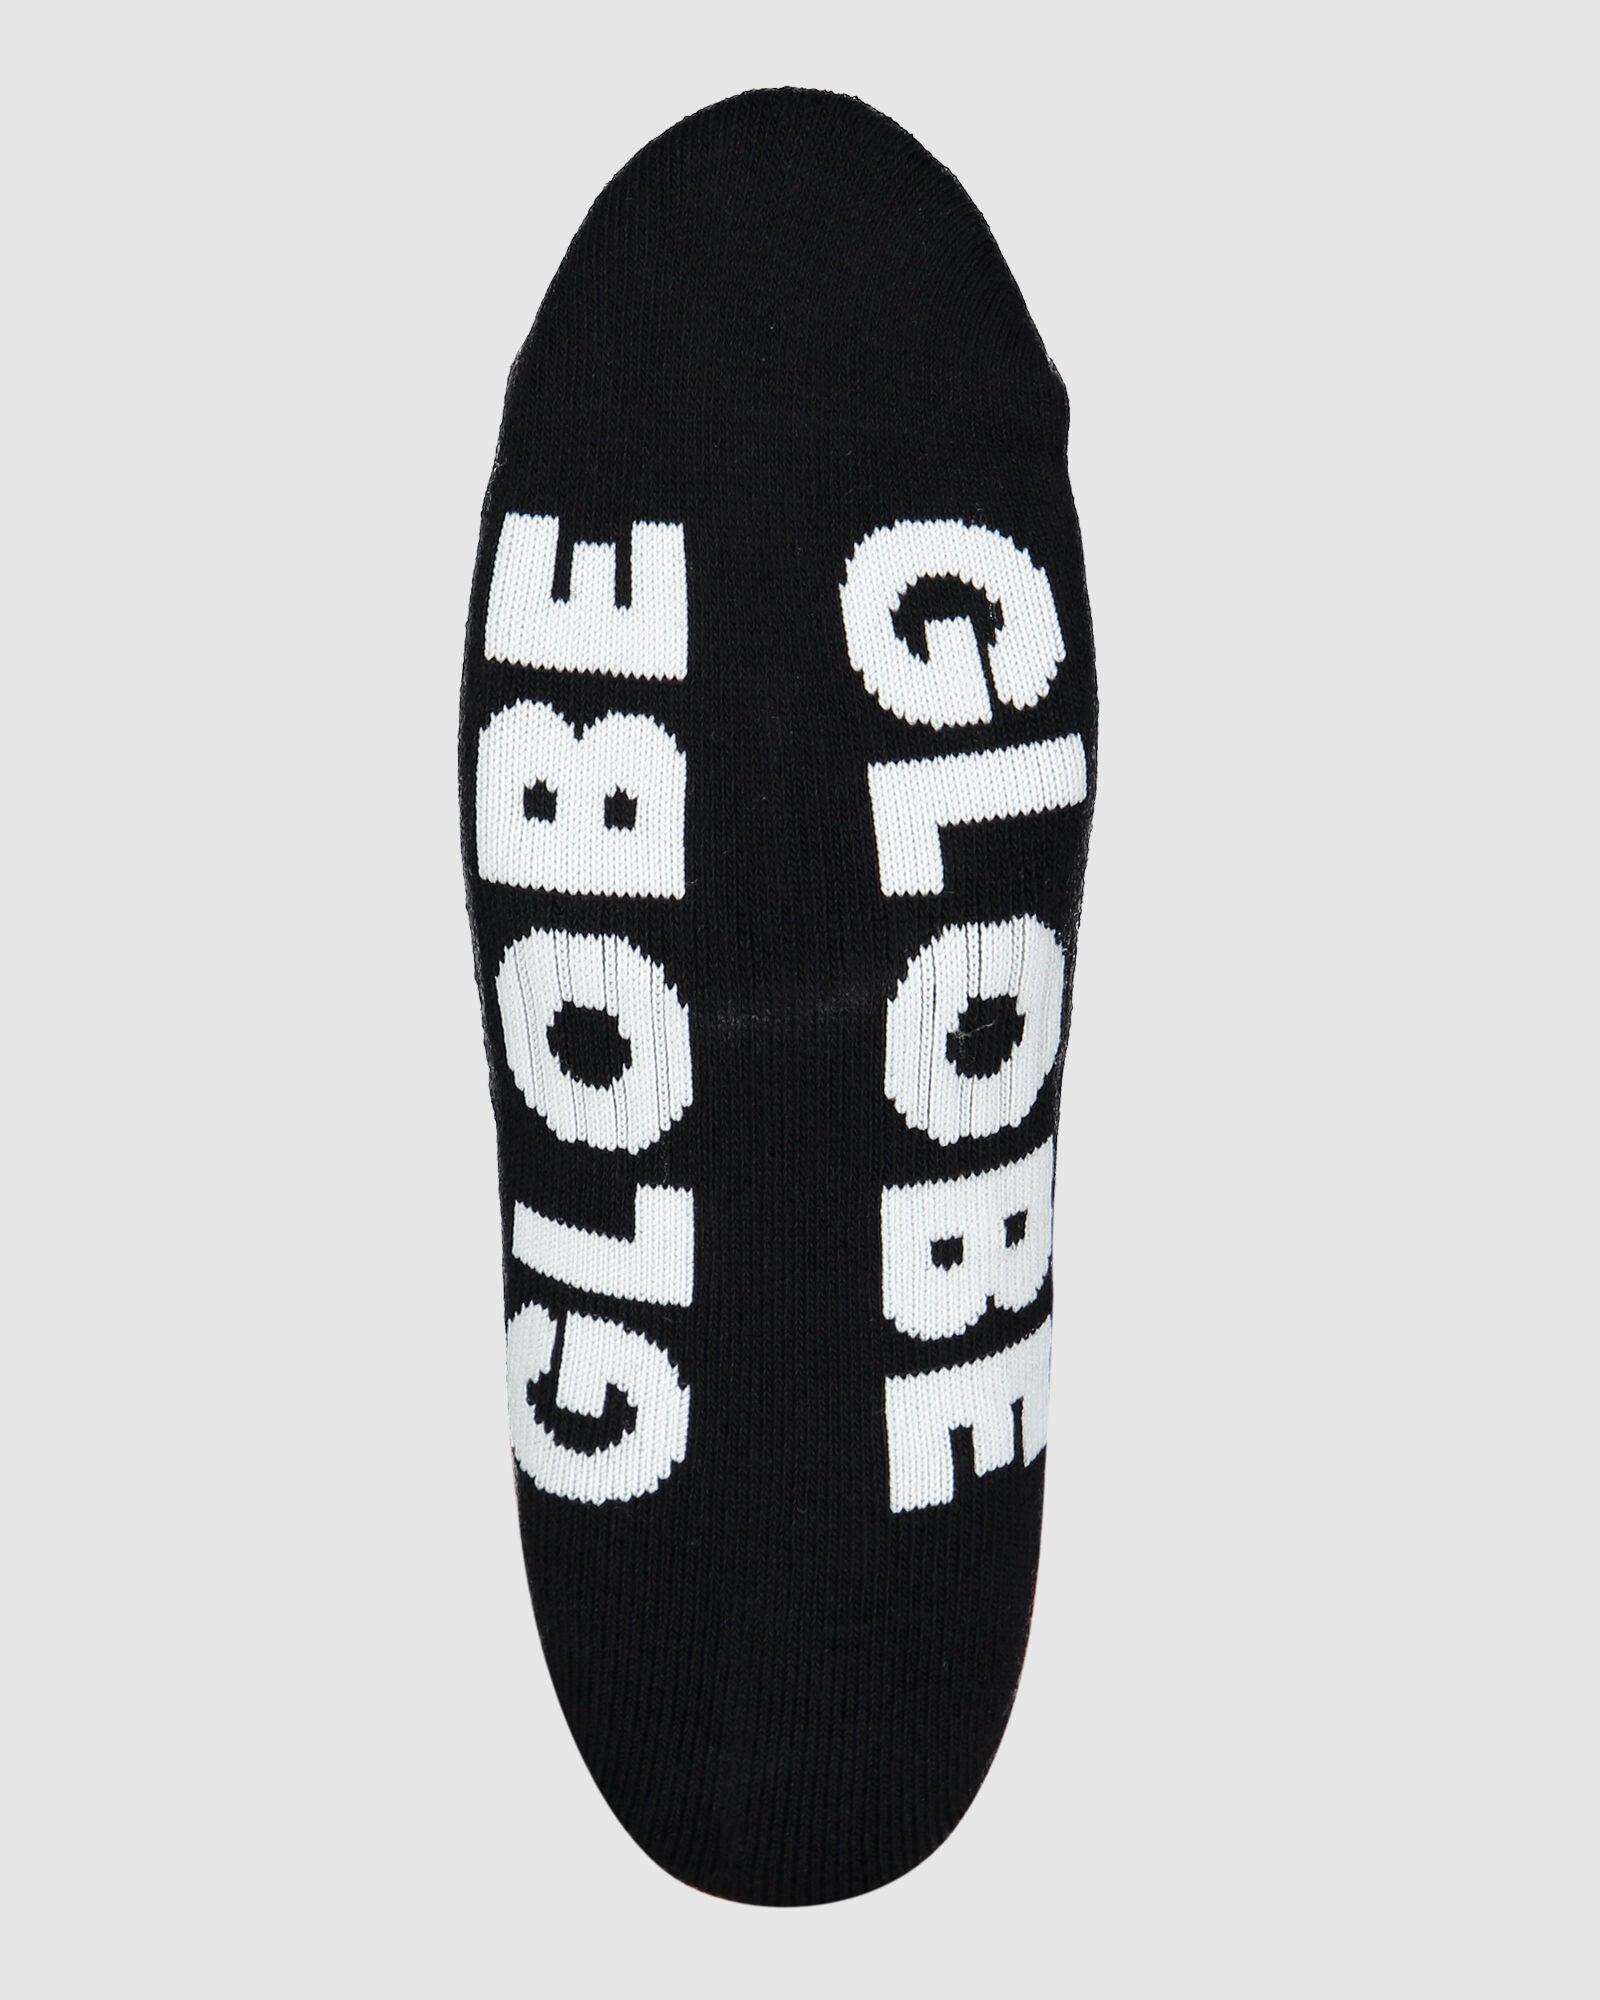 Globe Boys Blackout Socks 5 PK Black